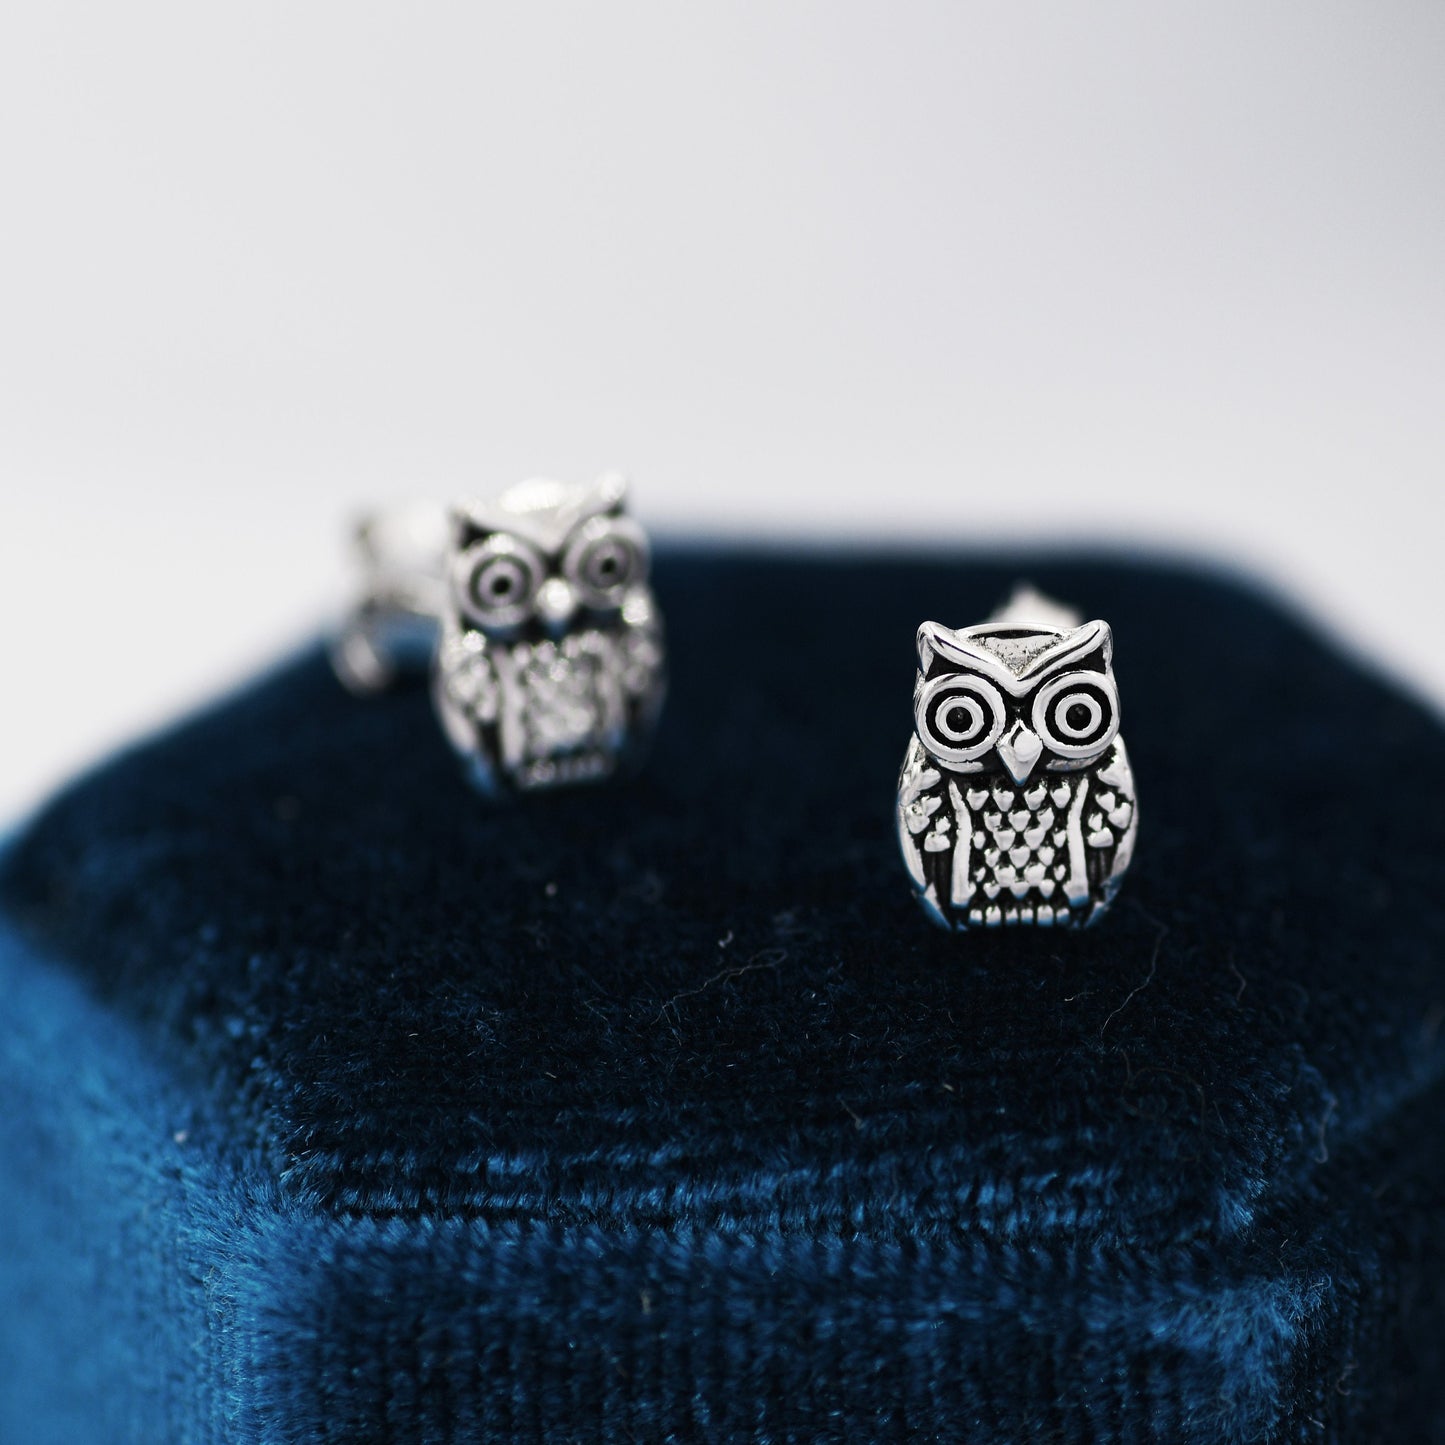 Owl Stud Earrings in Sterling Silver, Oxidised Silver Finish, Silver Animal Earrings, Nature Inspired Jewellery